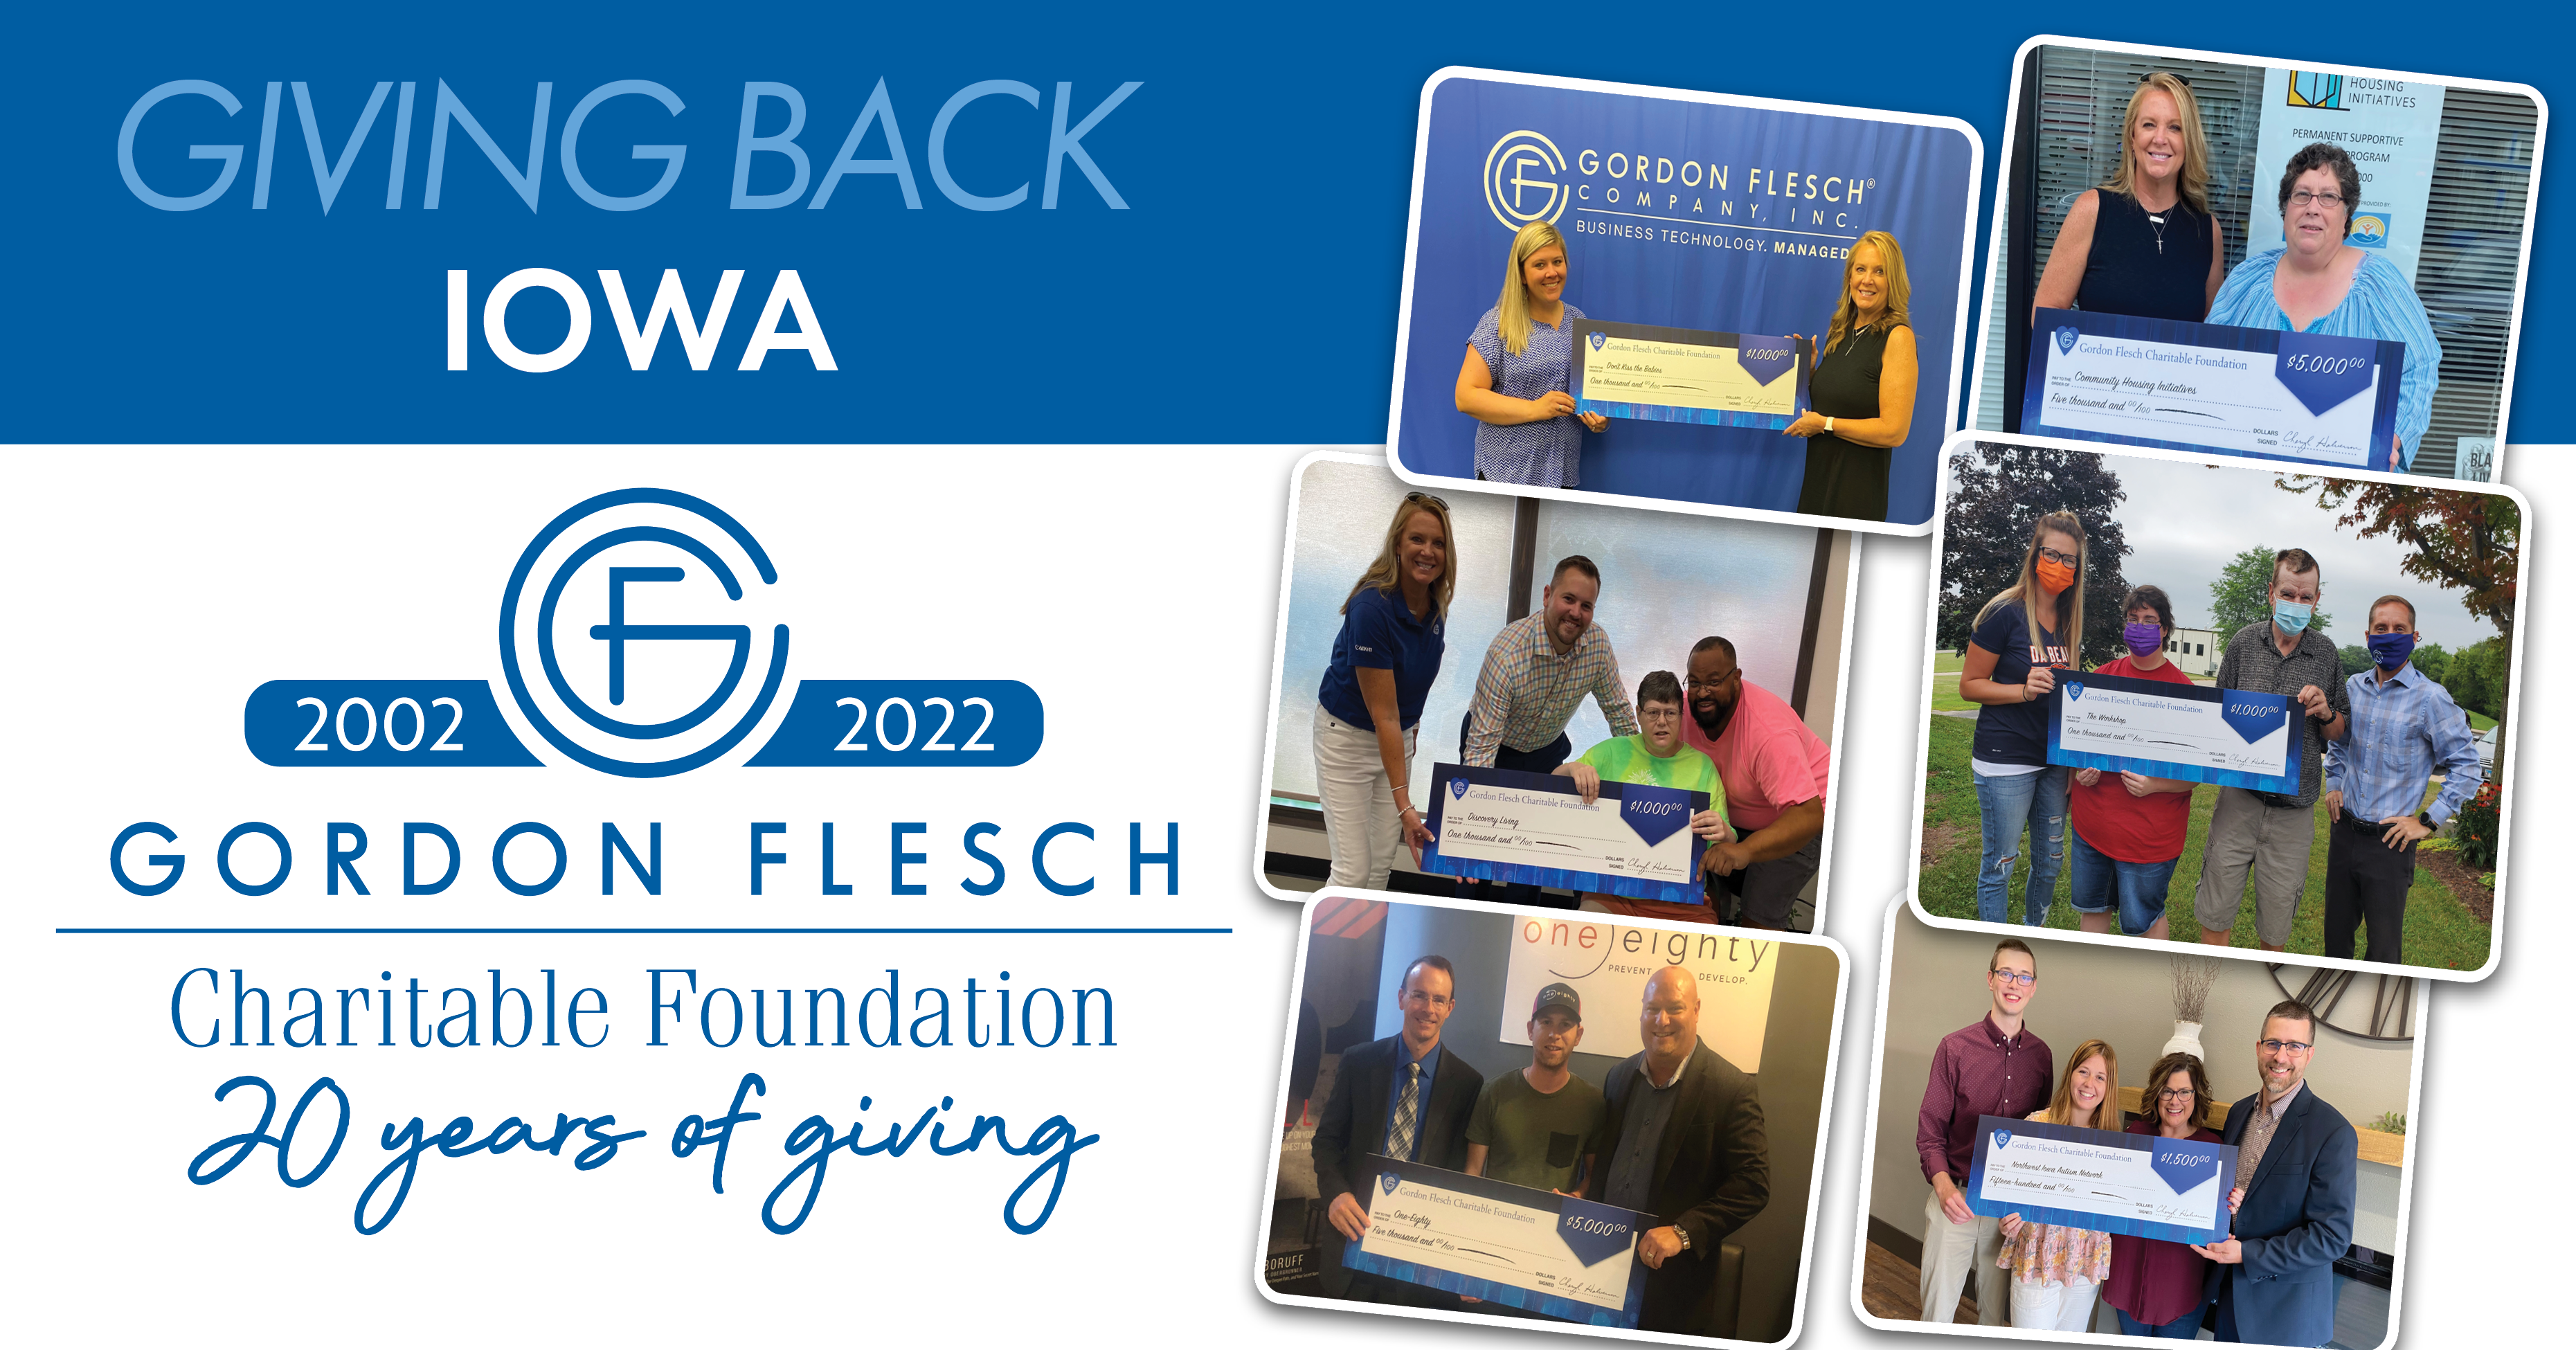 Gordon Flesch Charitable Foundation Donates $14,500 to Iowa Charities